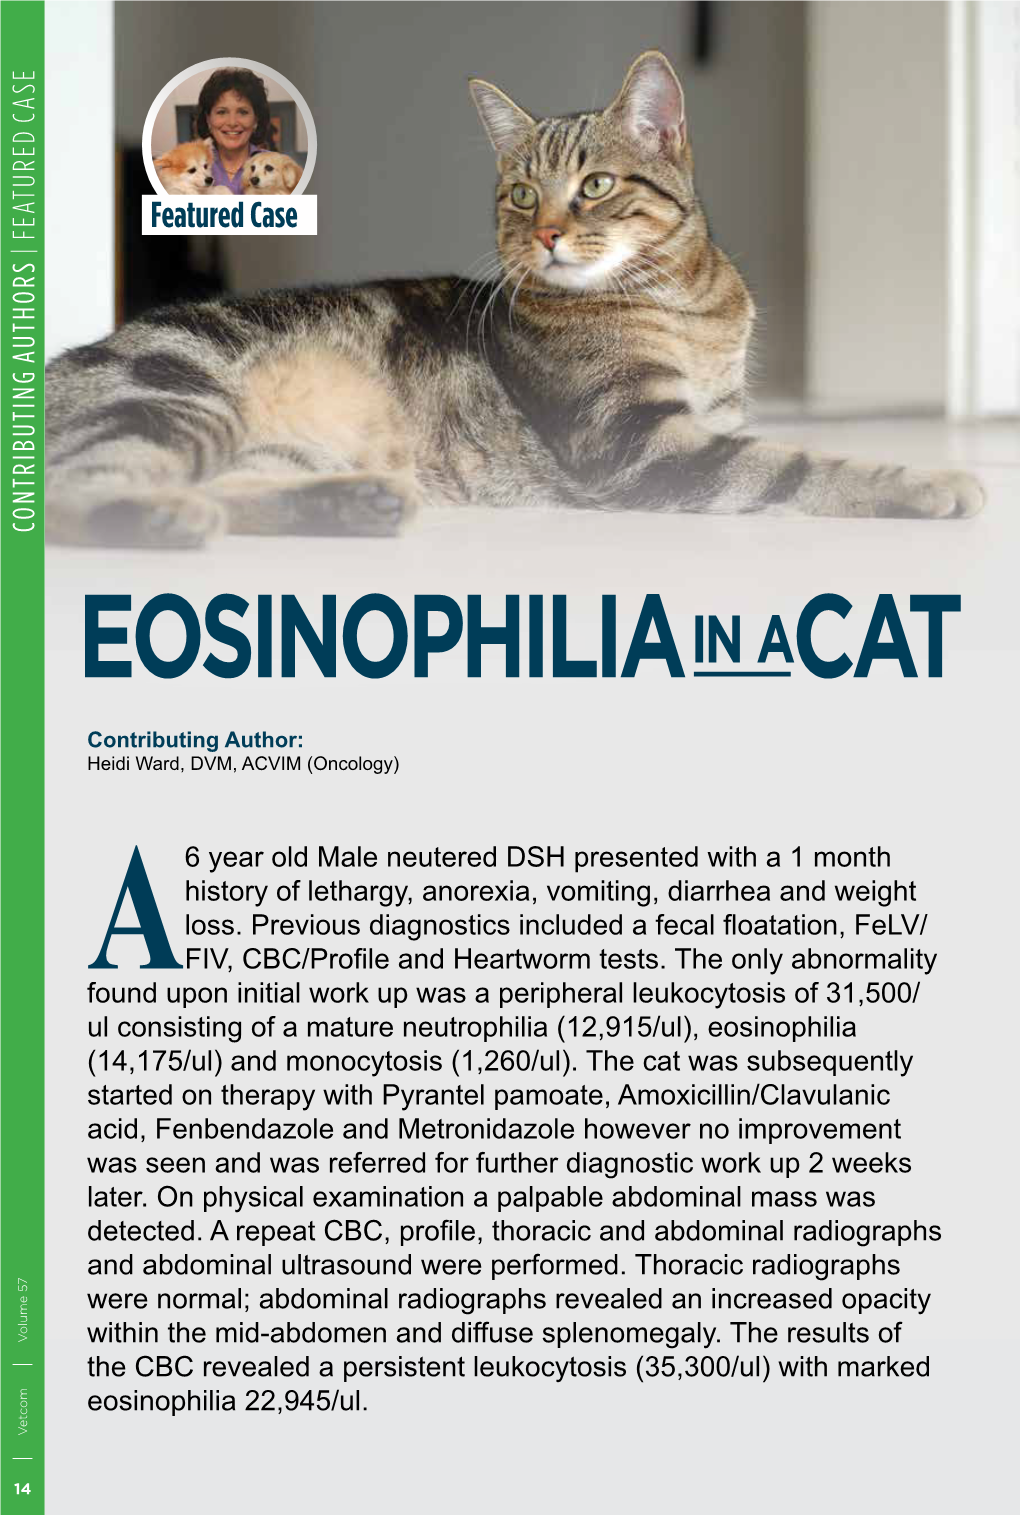 FEATURED CASE EOSINOPHILIA a Heidi Ward, DVM, ACVIM (Oncology) Contributing Author: Eosinophilia 22,945/Ul